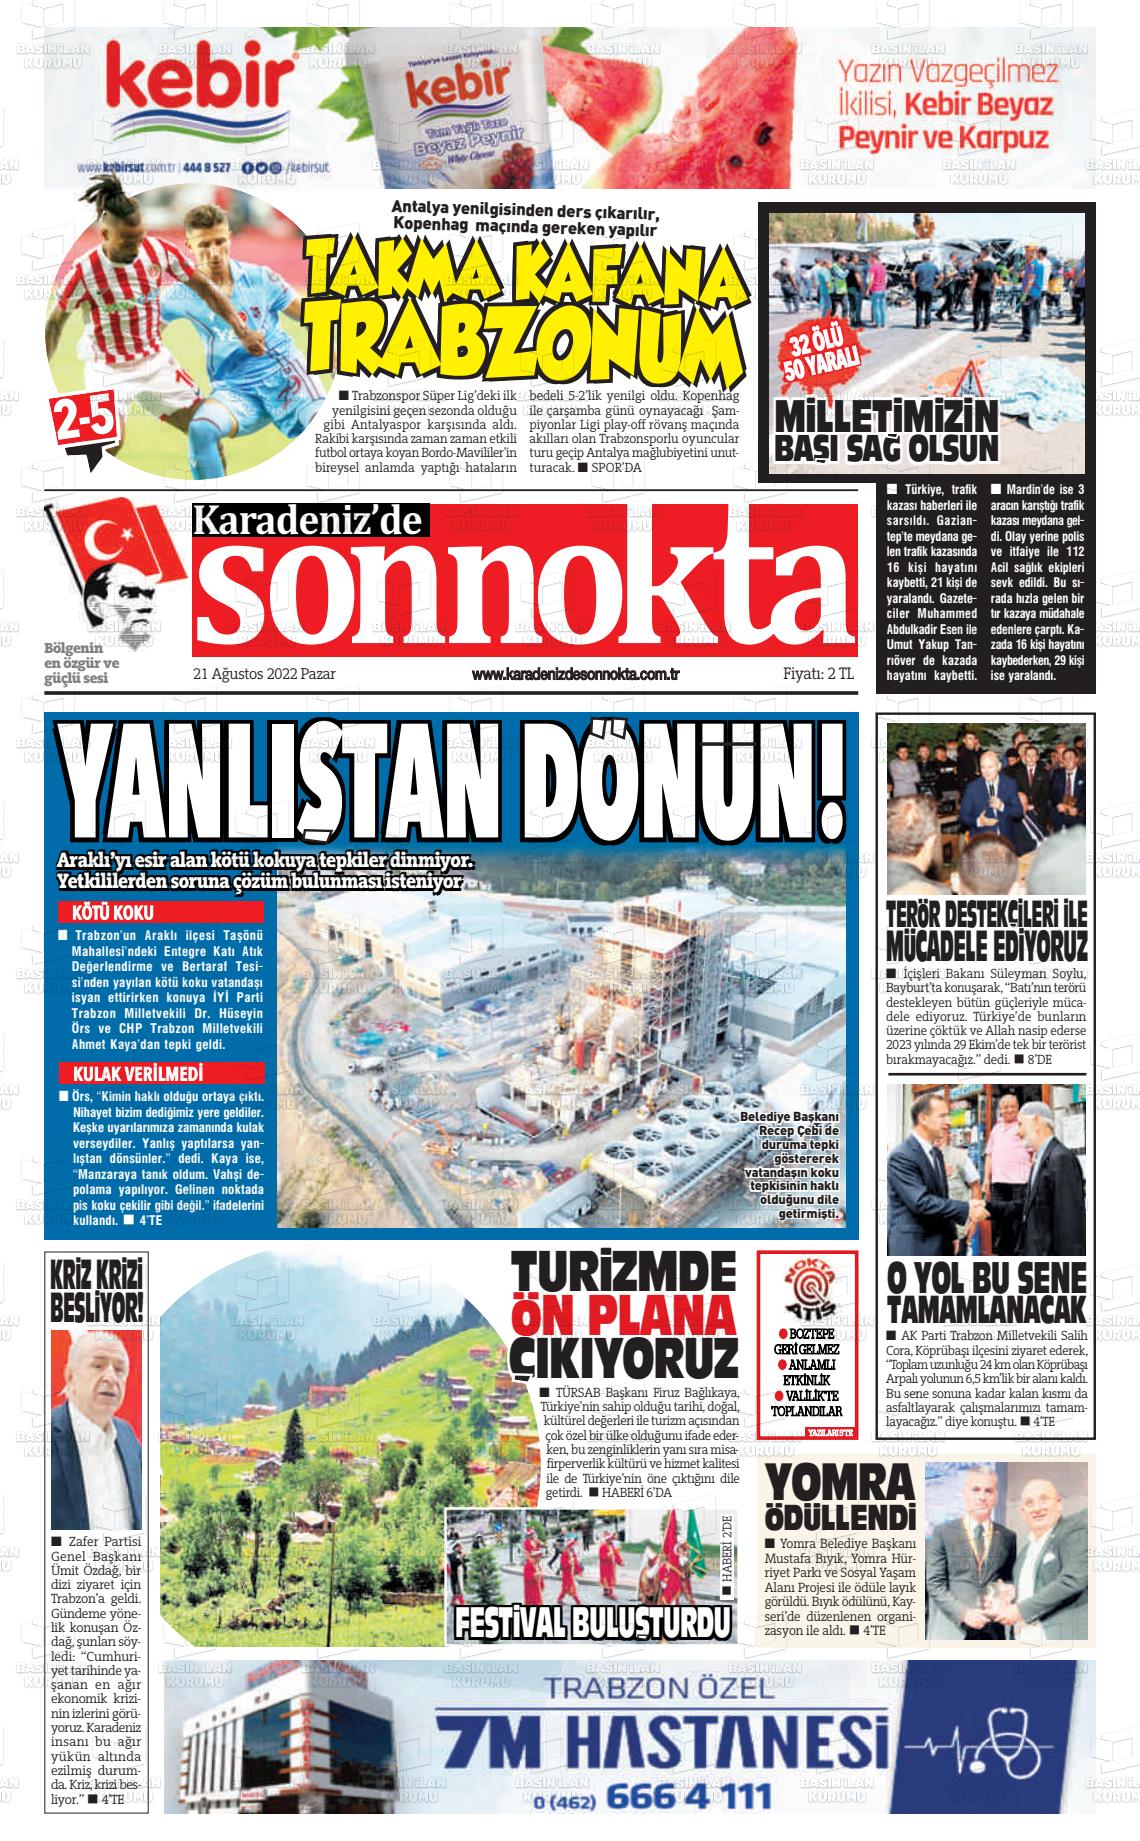 21 Ağustos 2022 Karadeniz'de Sonnokta Gazete Manşeti